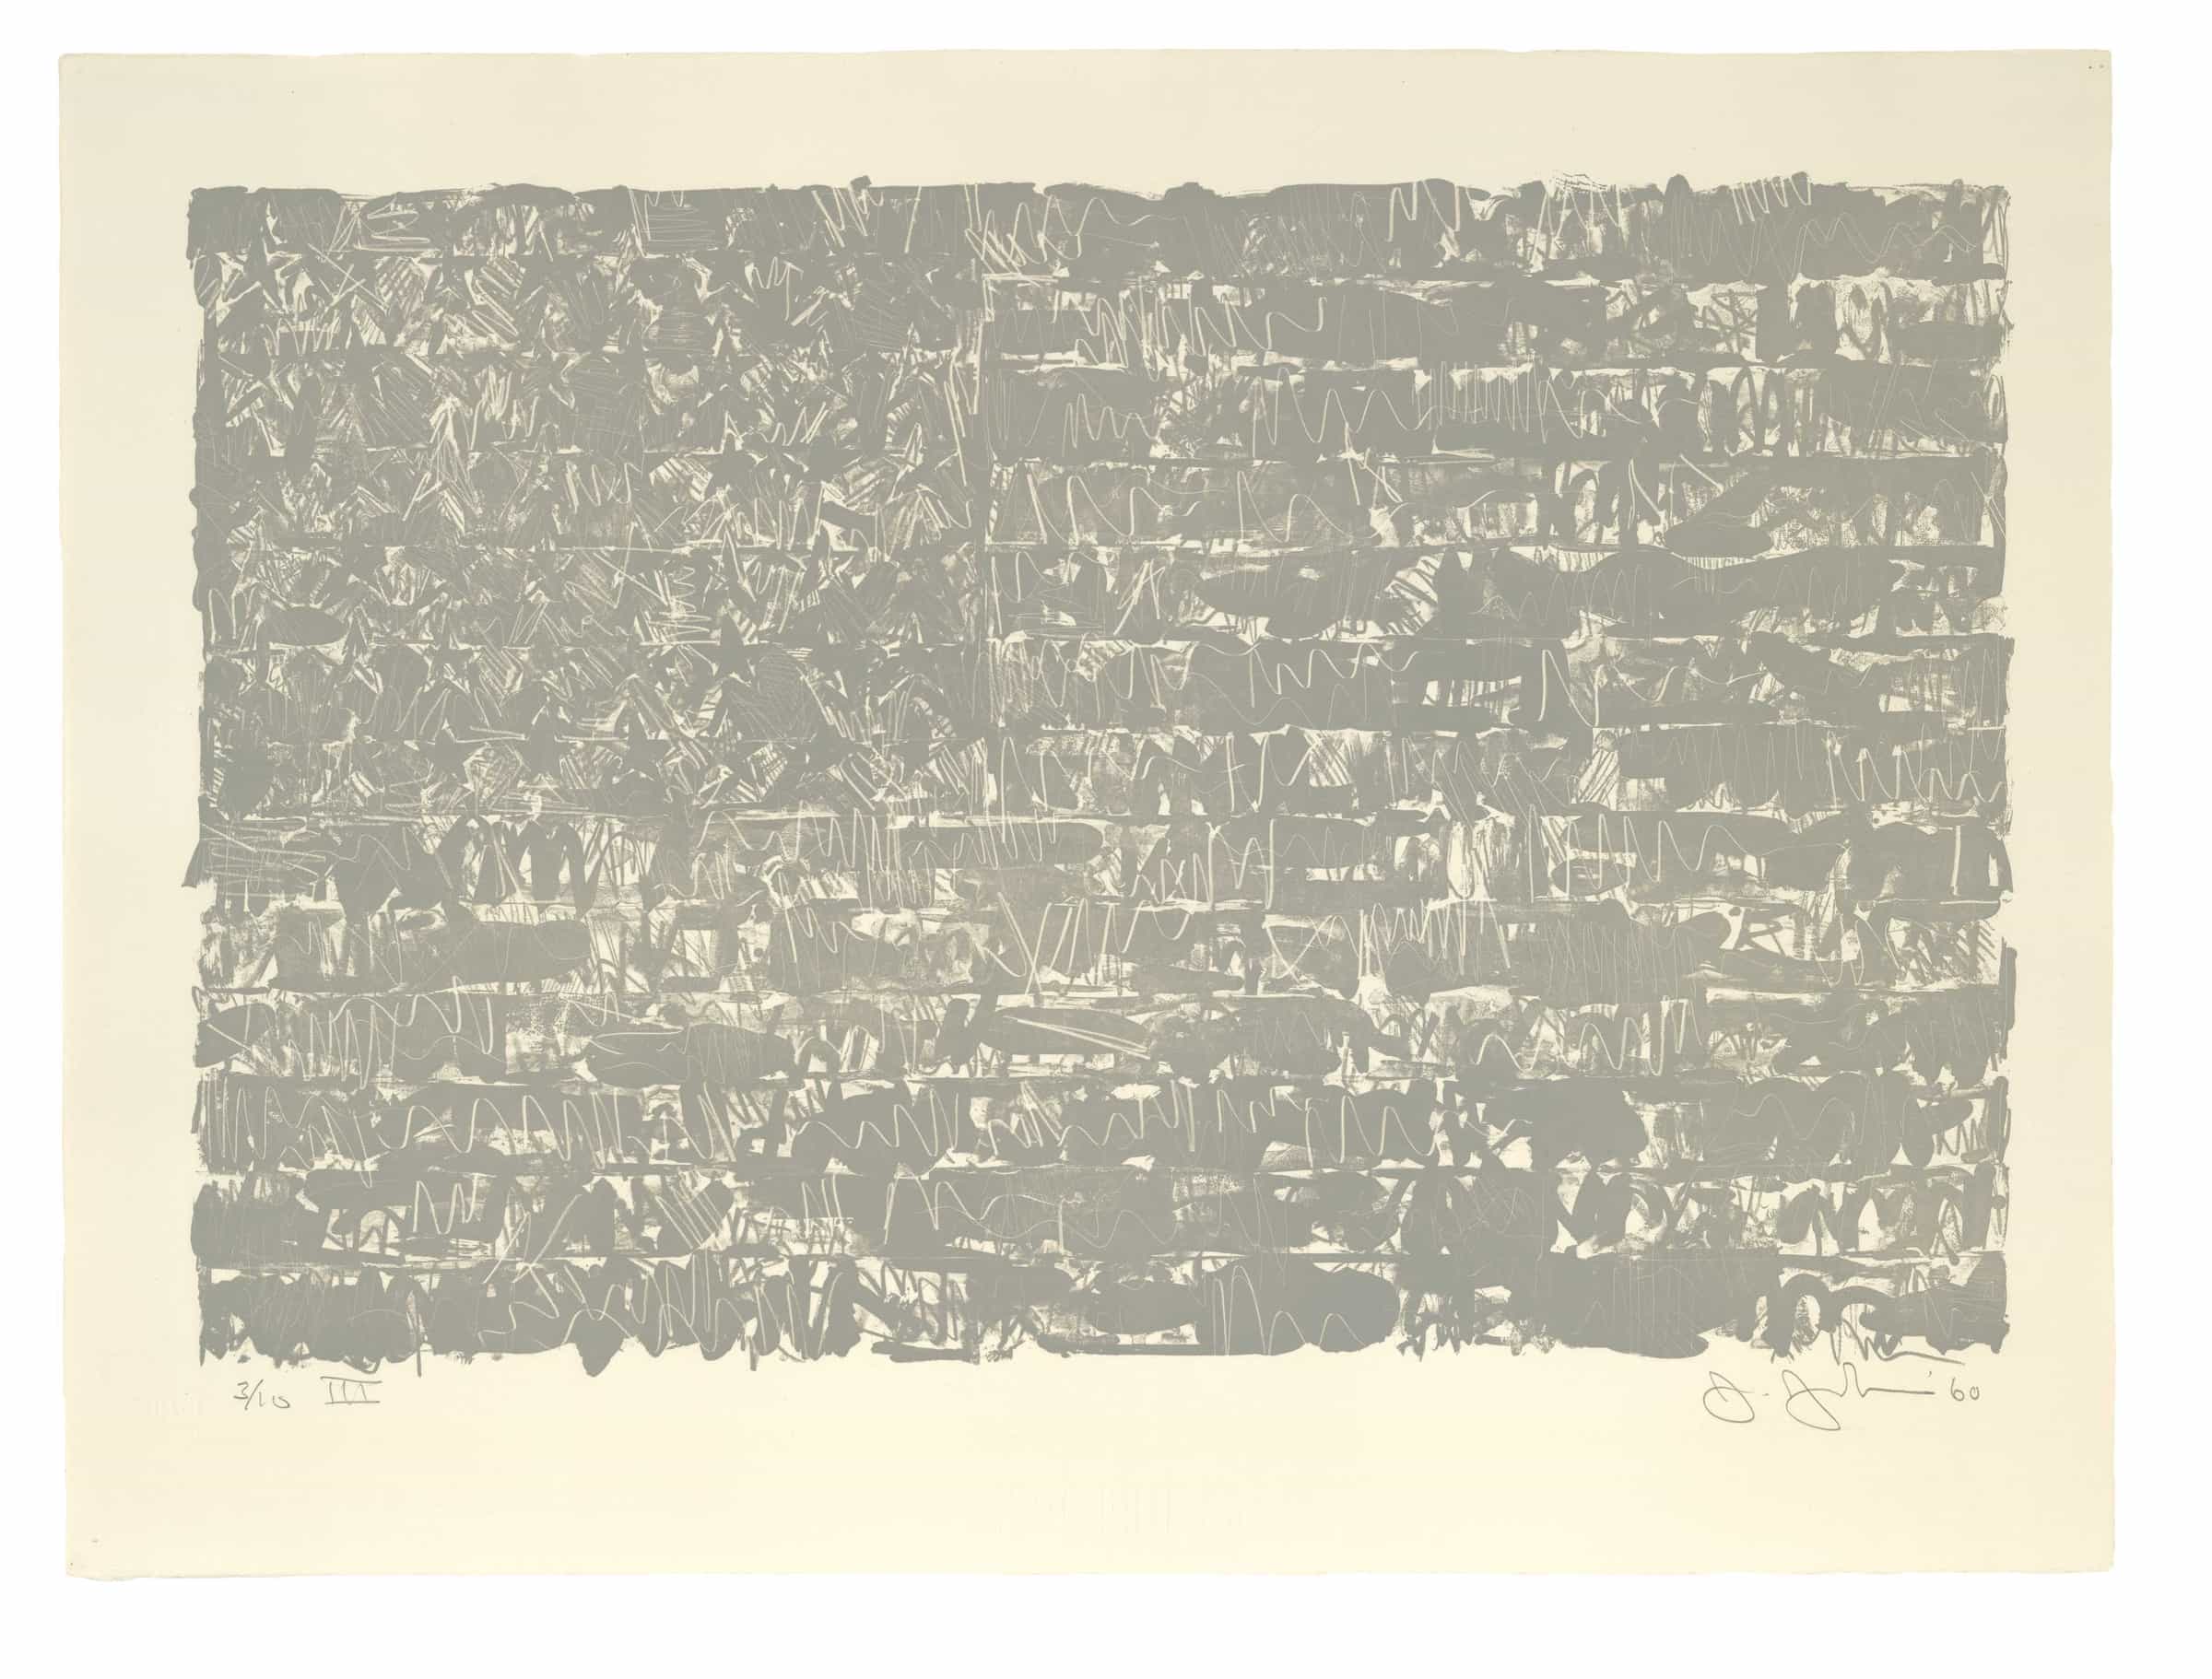 Jasper Johns, Flag III, 1960